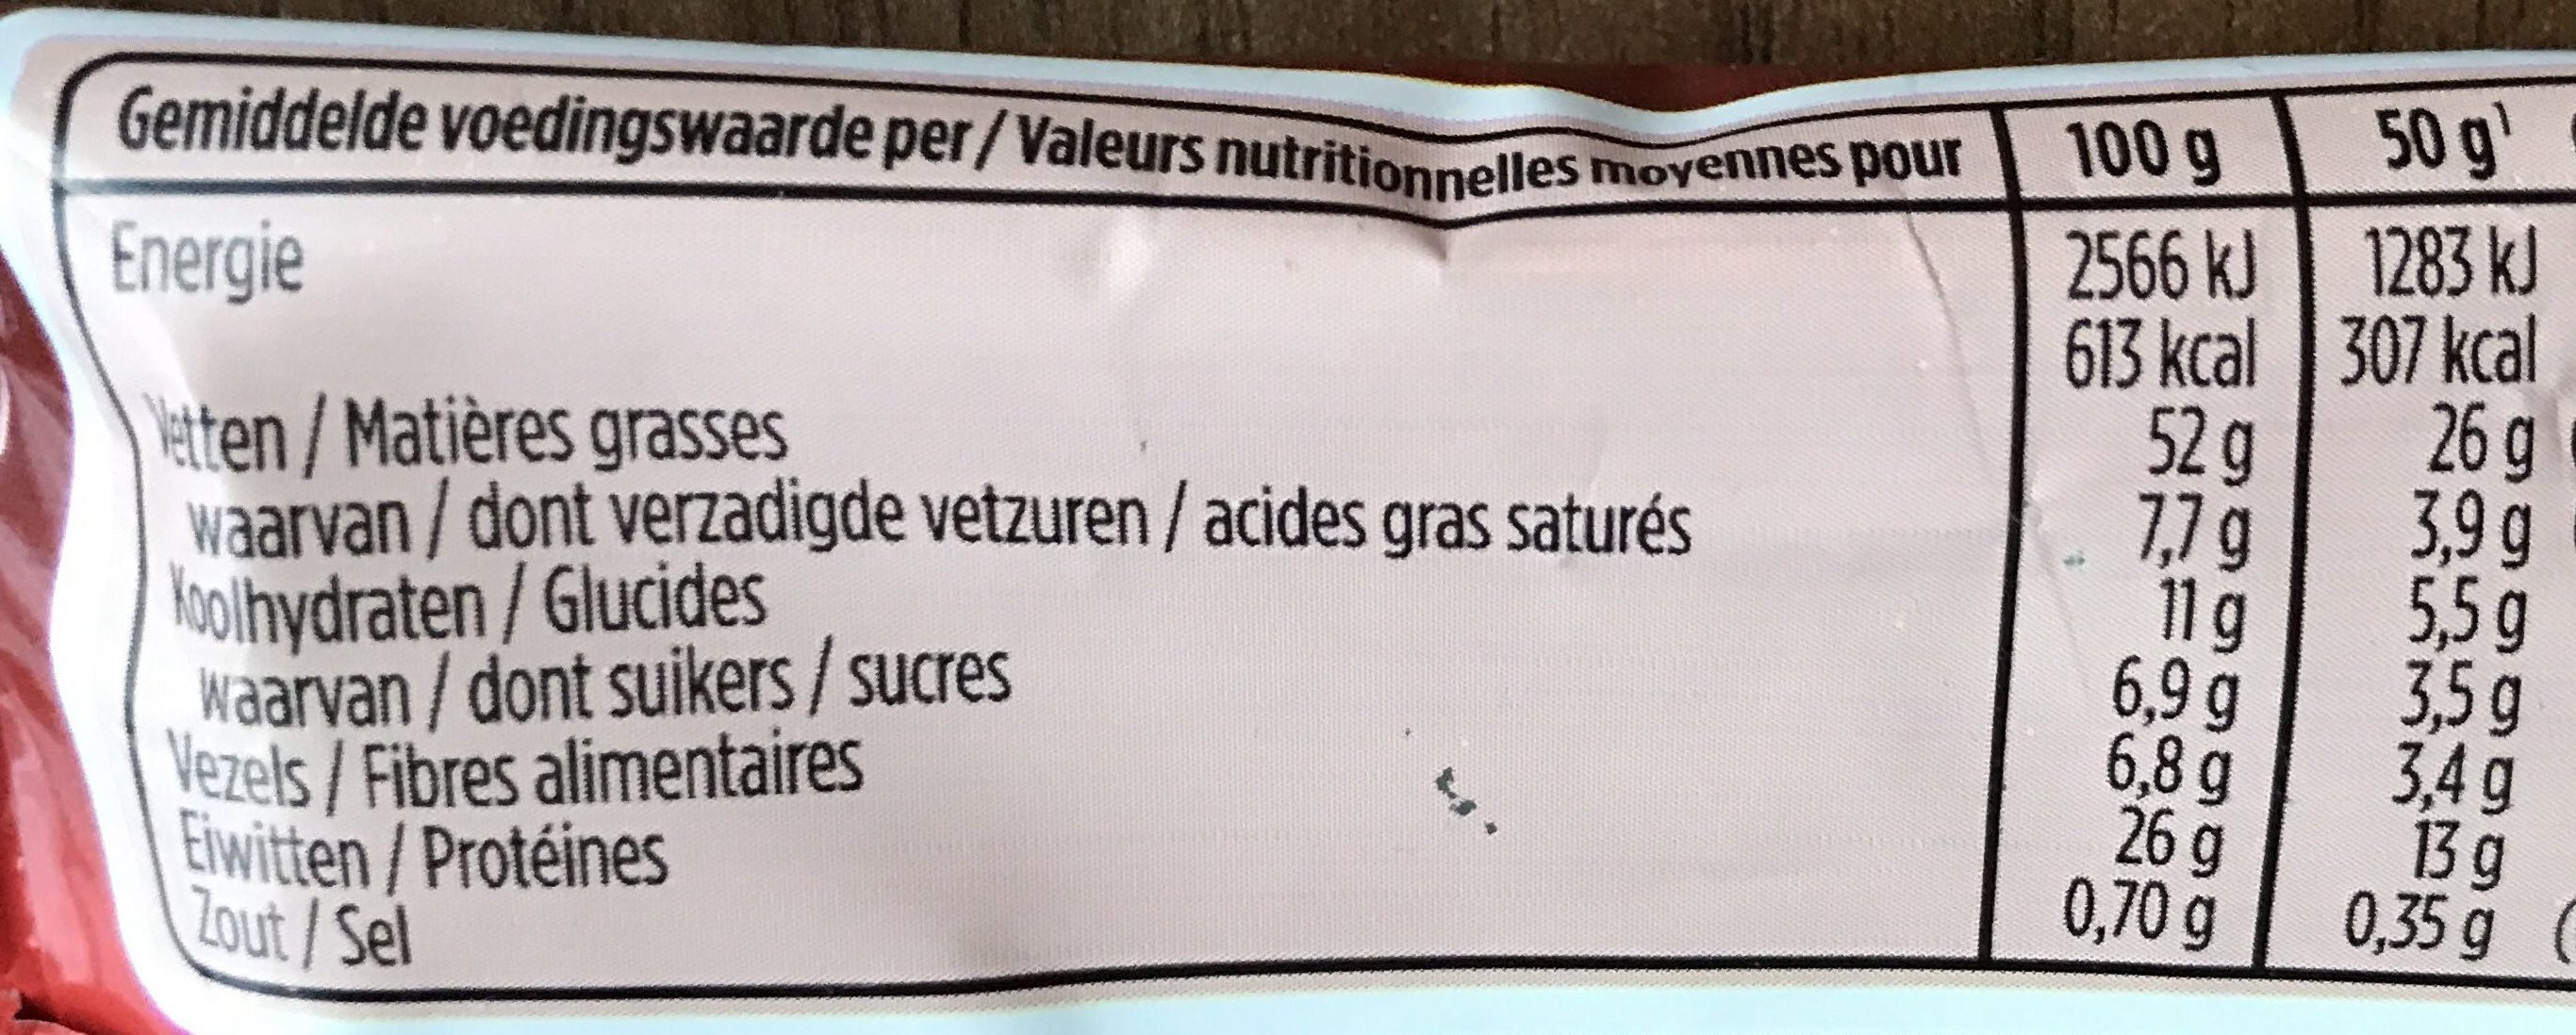 Cacahuète salées - Información nutricional - fr